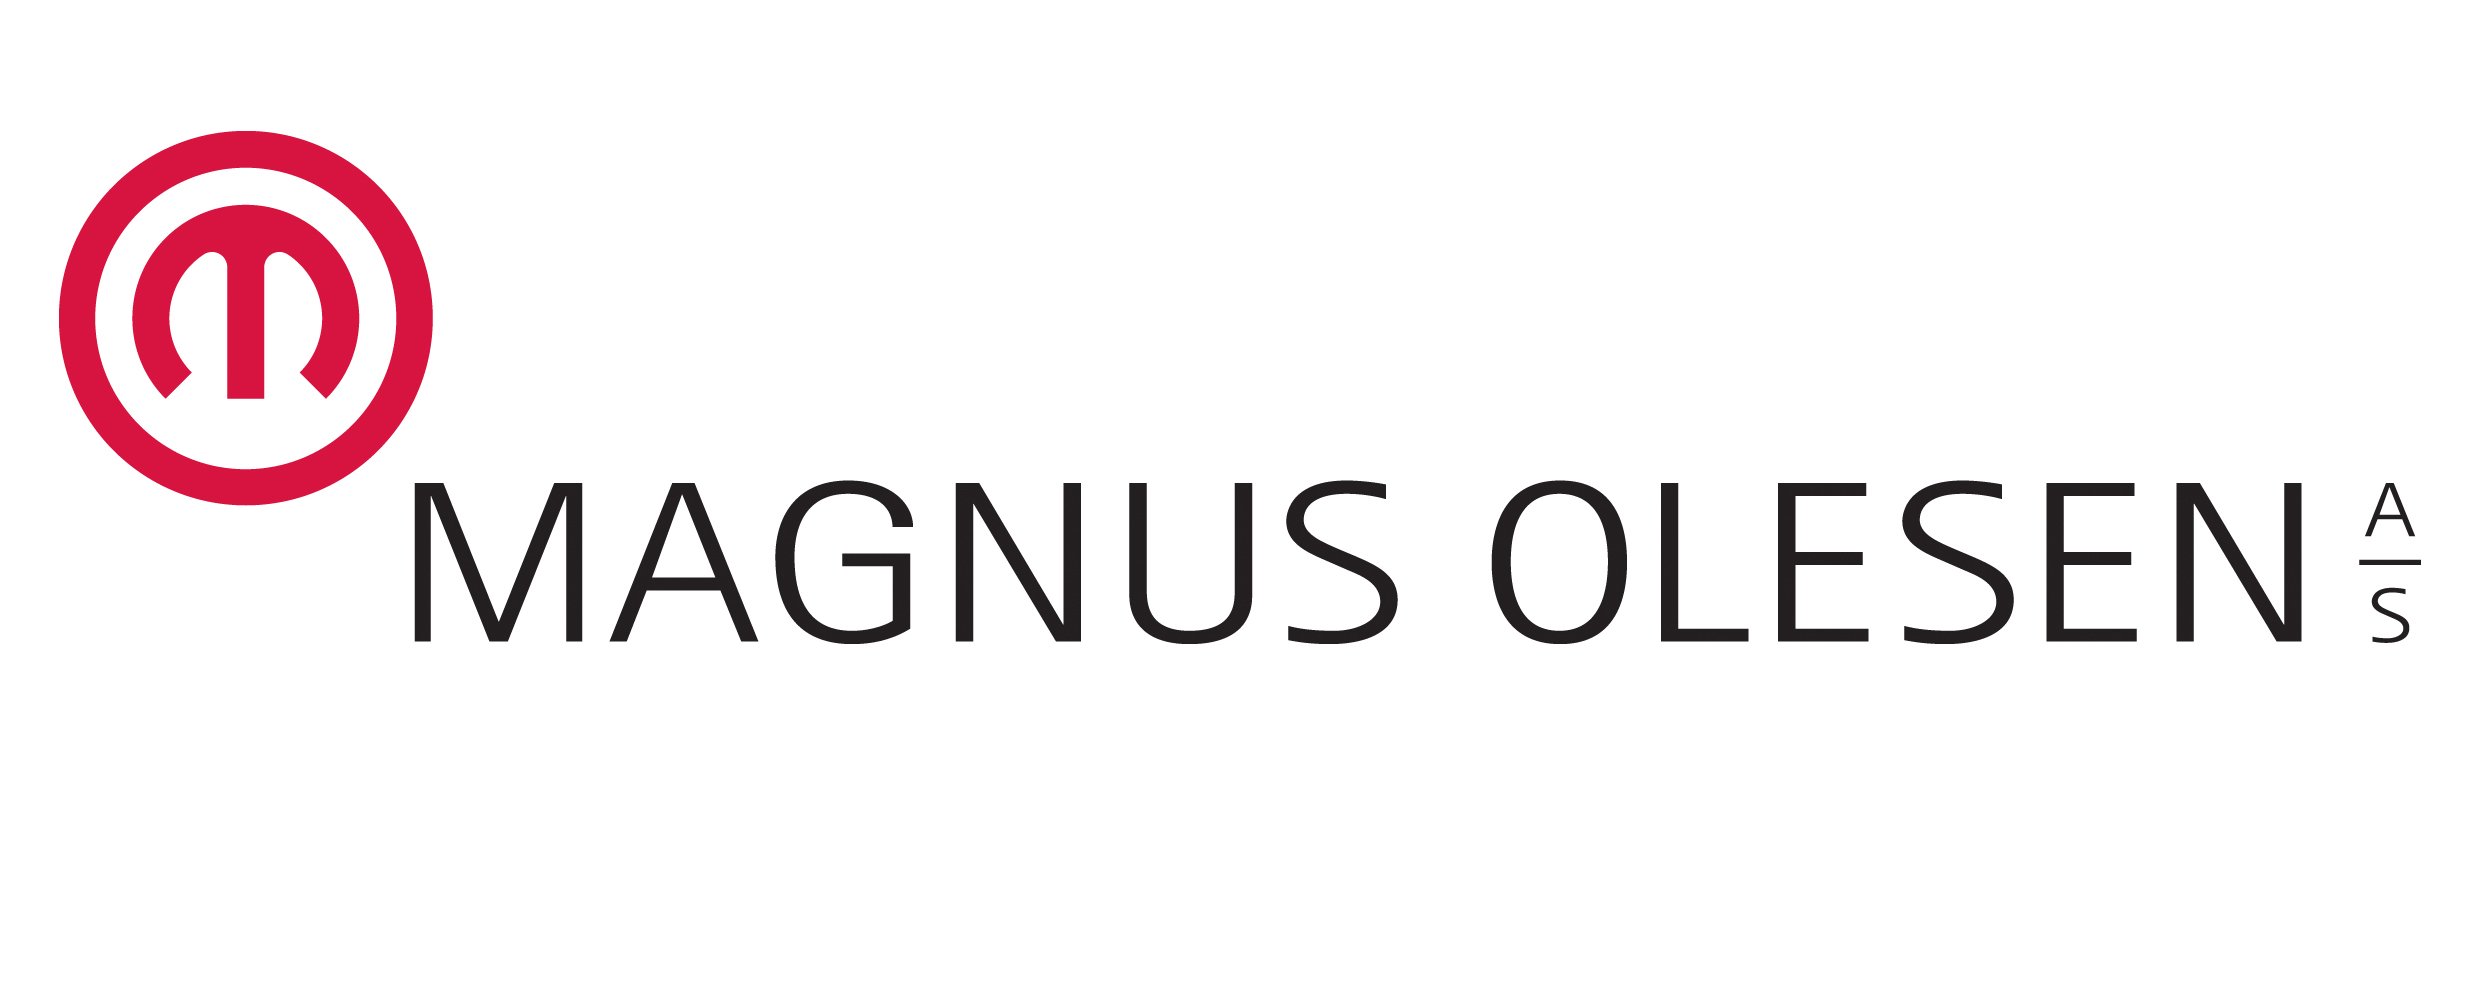 MagnusOlesen_logo.jpg